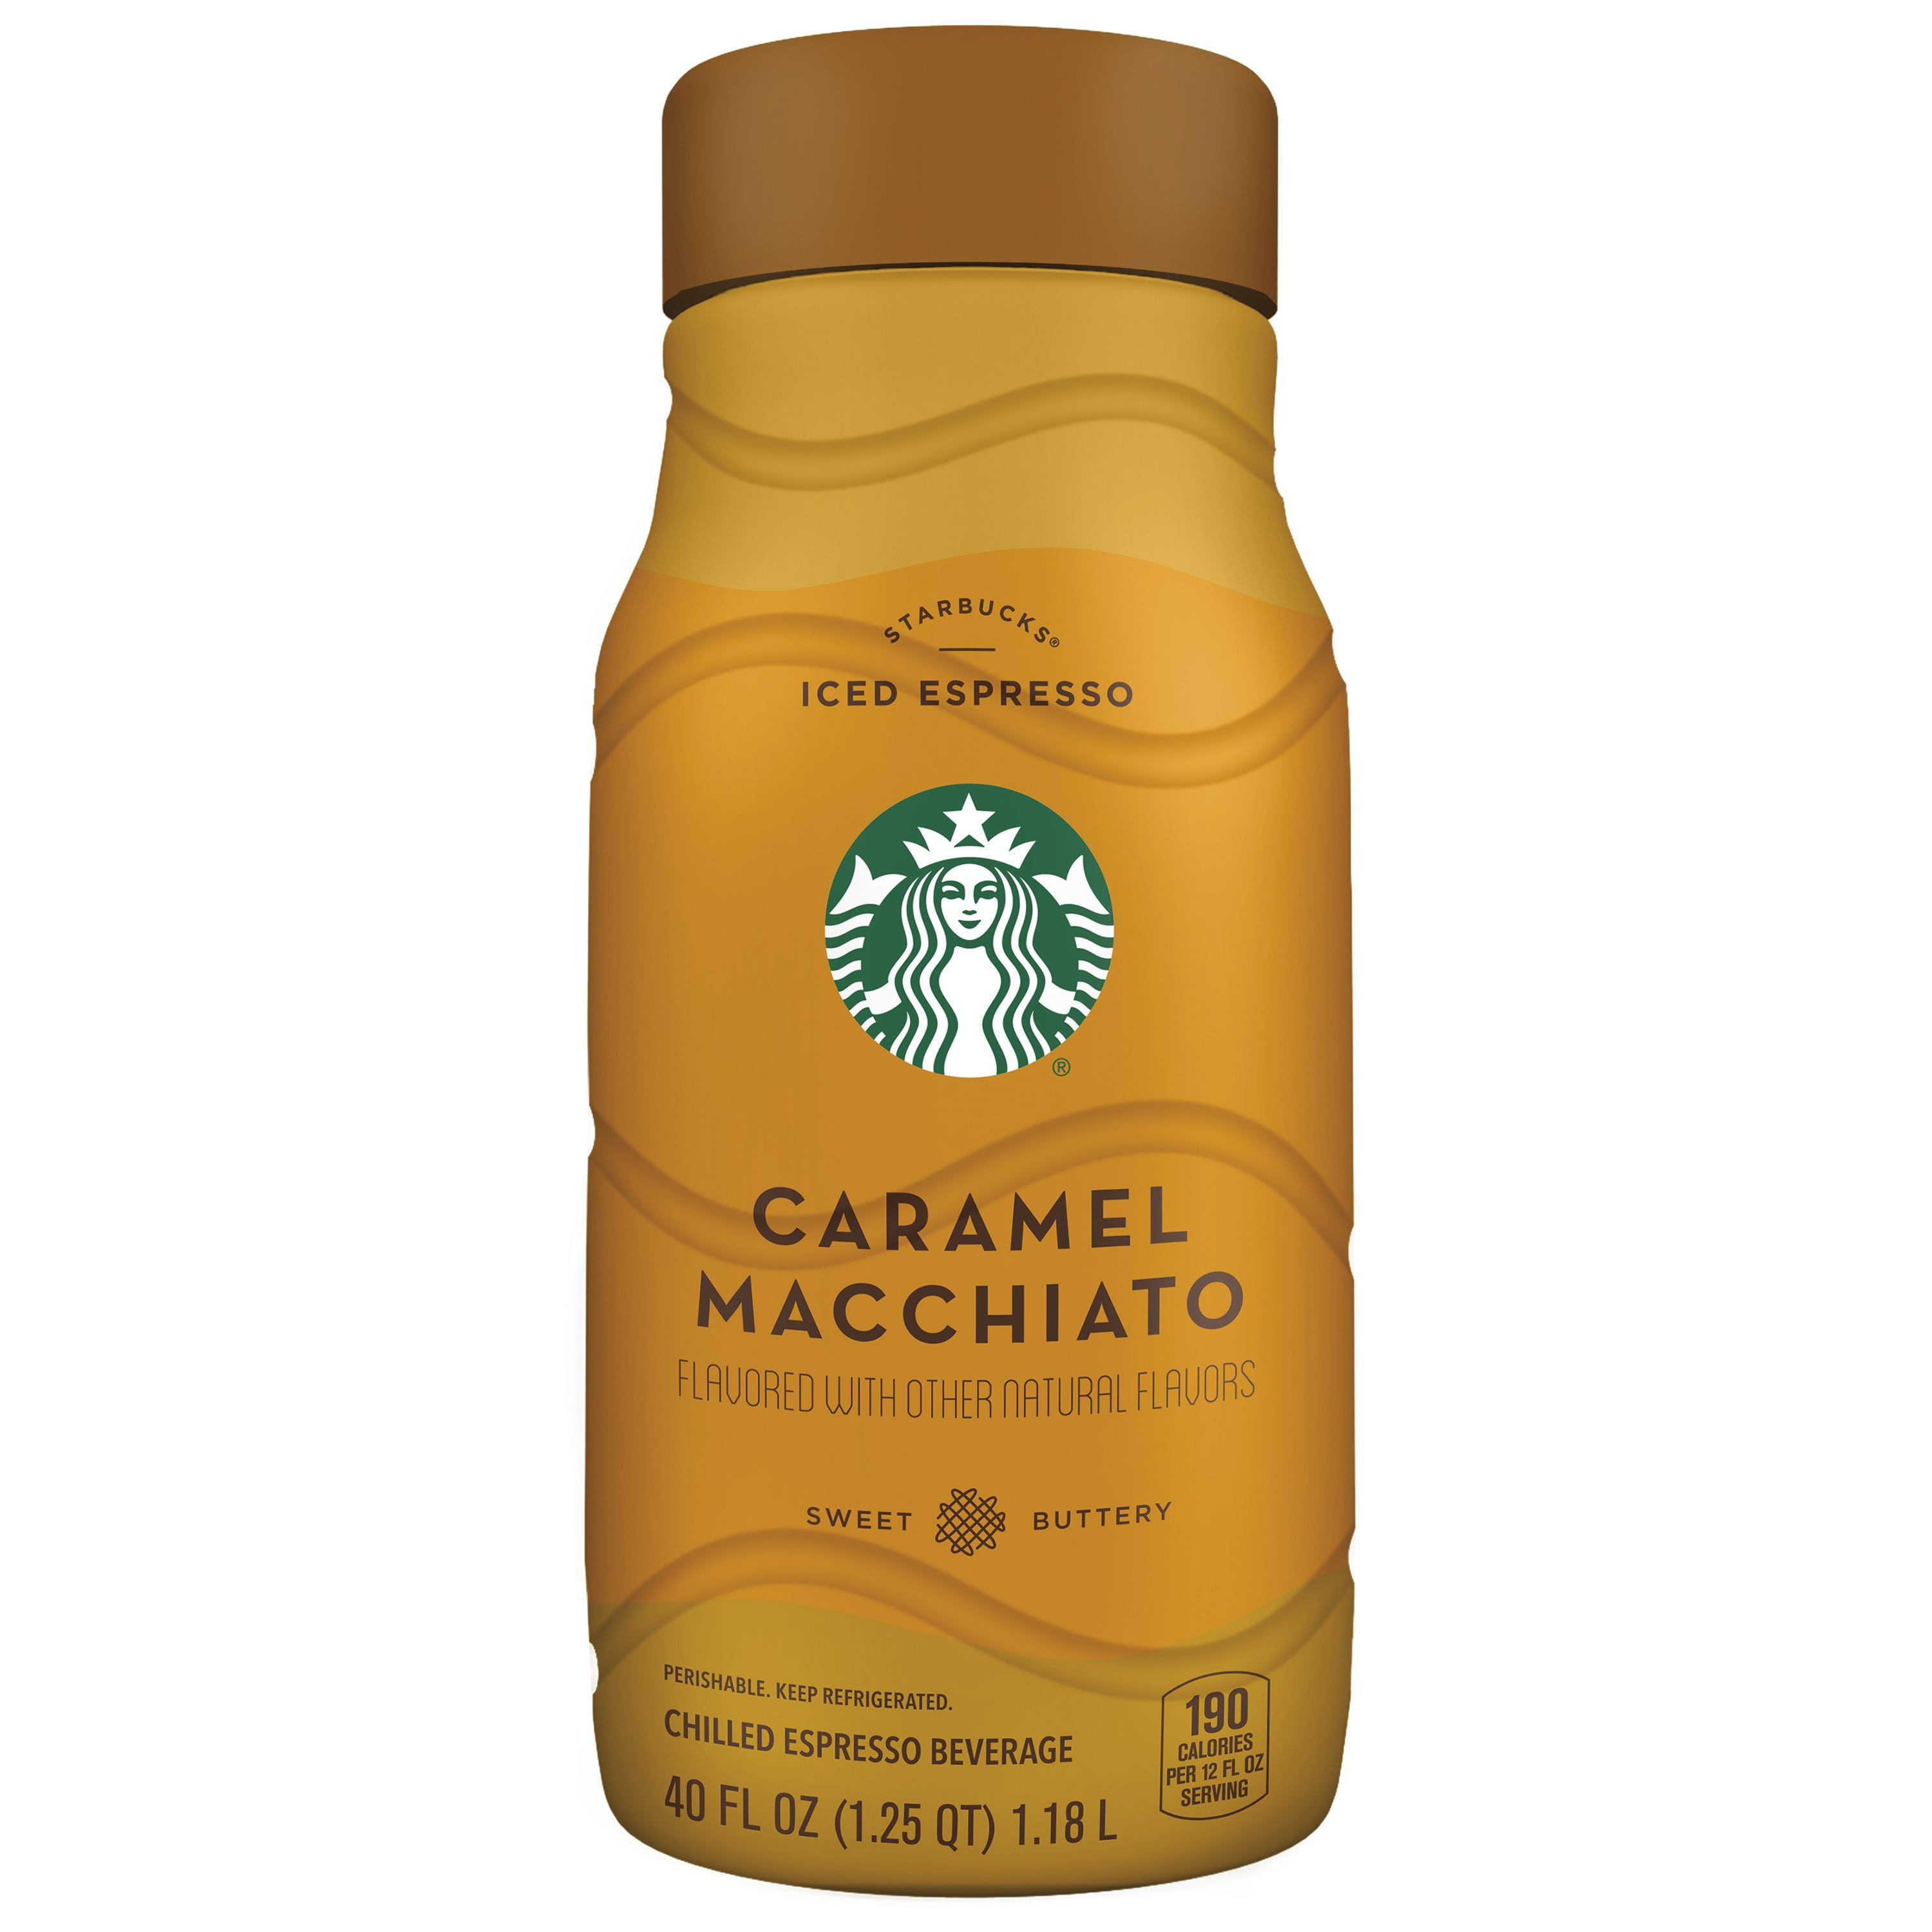 Starbucks Frappuccino Coffee Drink, Caramel, 13.7 fl oz Bottles (12 Pack)